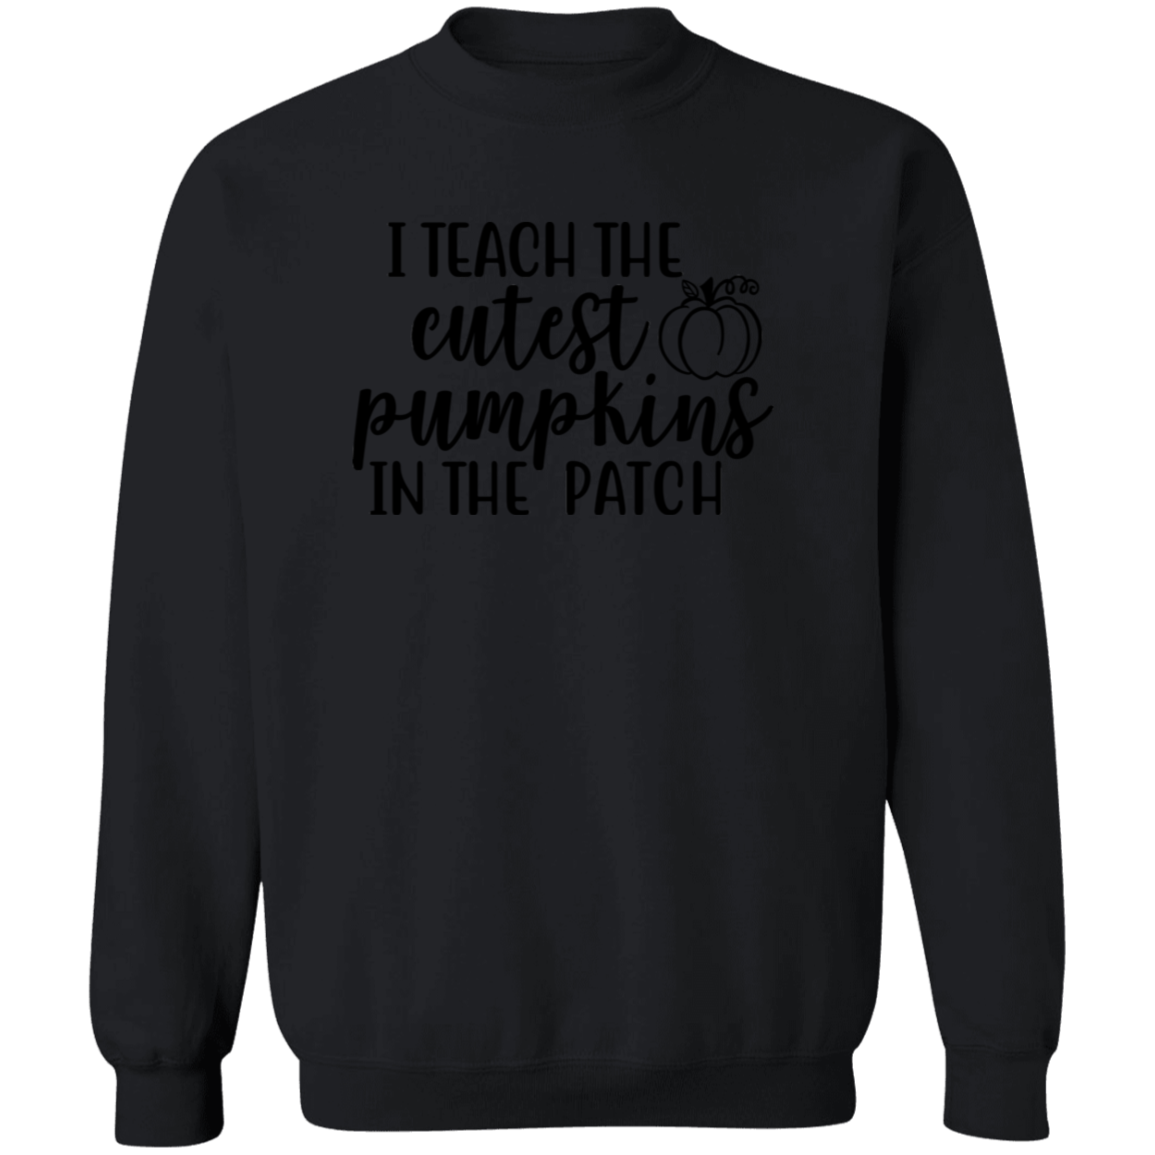 I Teach The Cutest Pumpkins In The Patch Sweatshirt